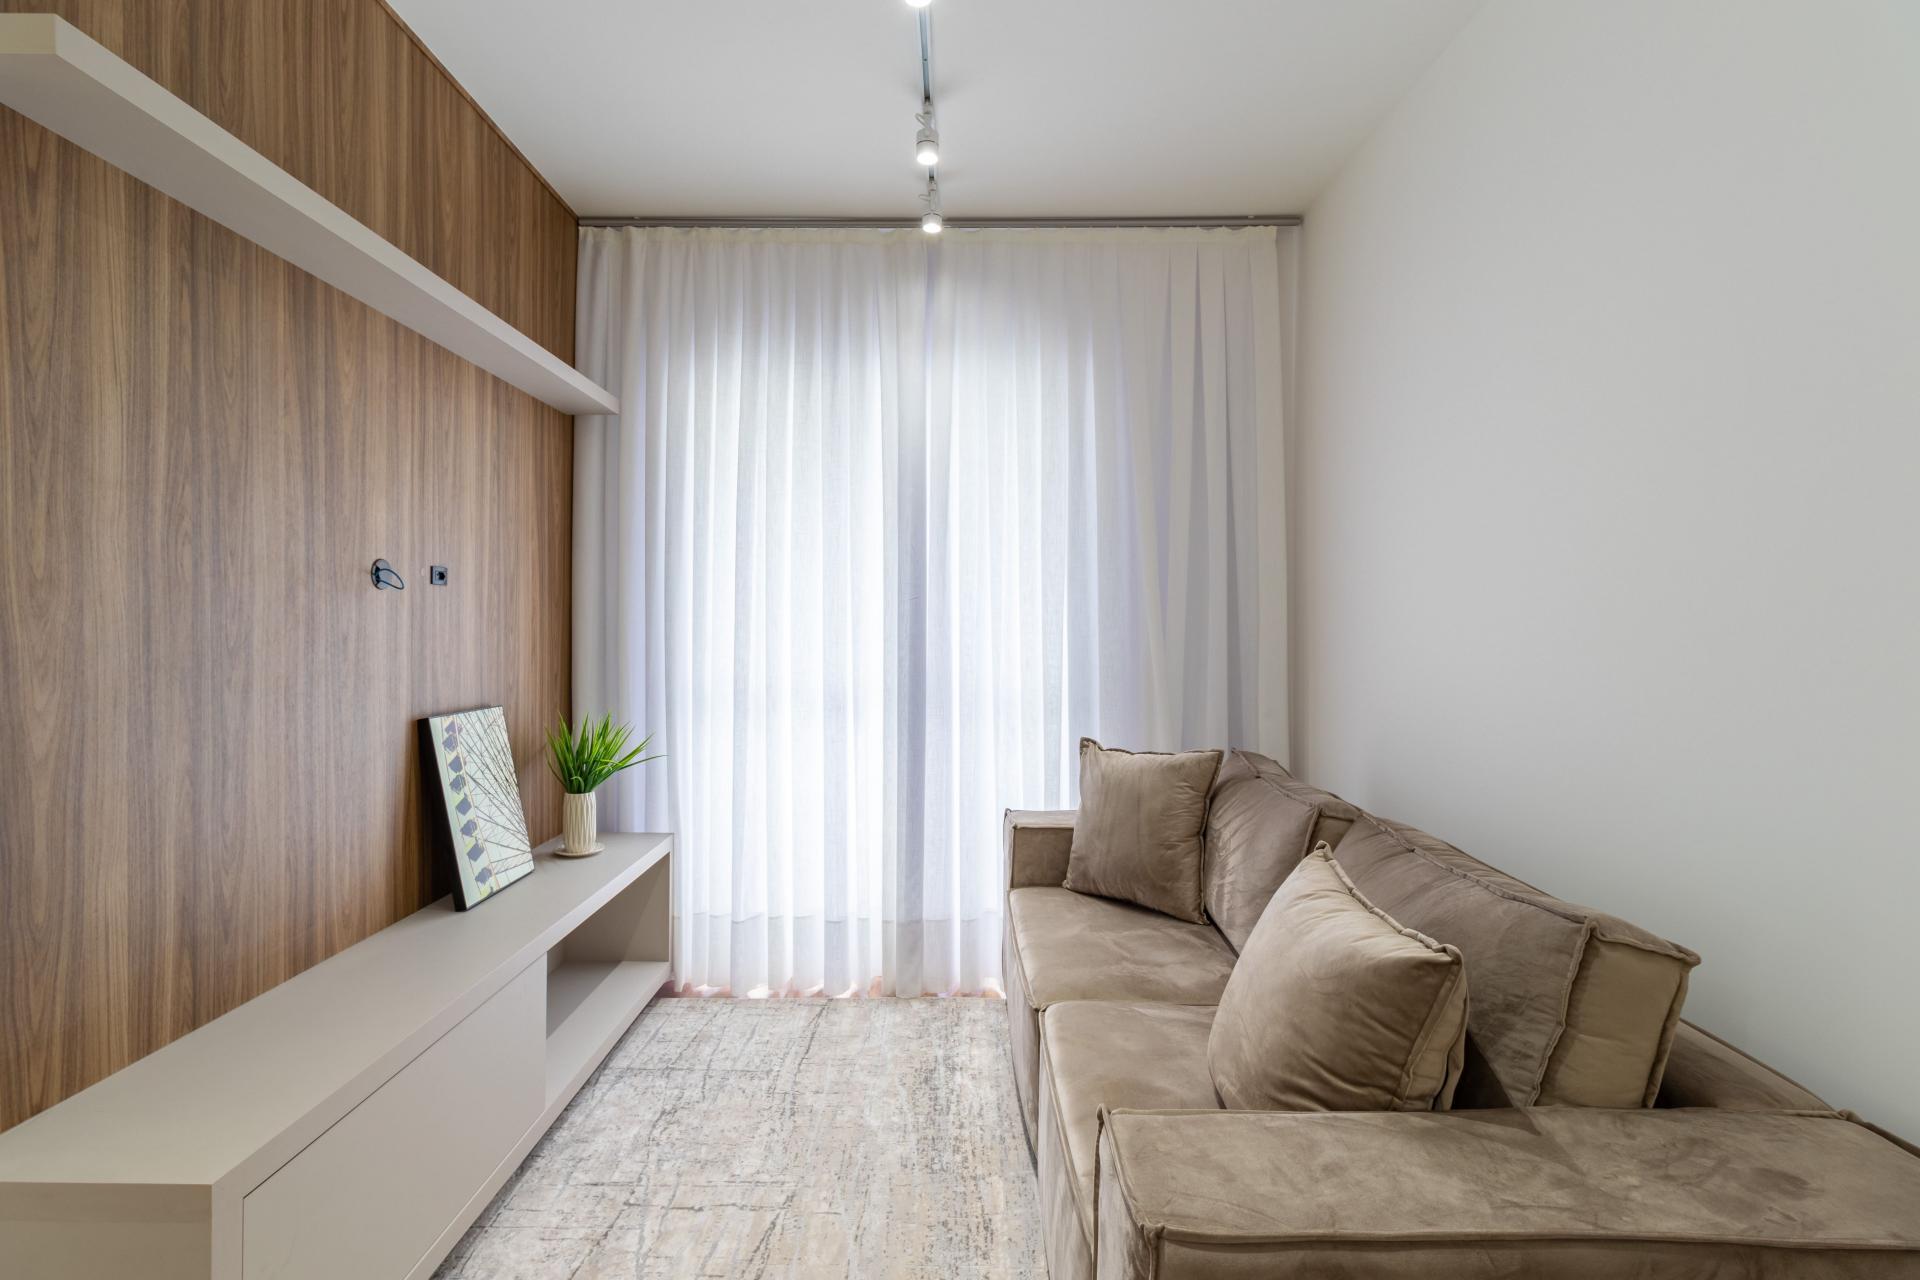 Apartamento Lançamento em Itaum - Joinville - Santa Catarina - Toulouse Residence em Joinville